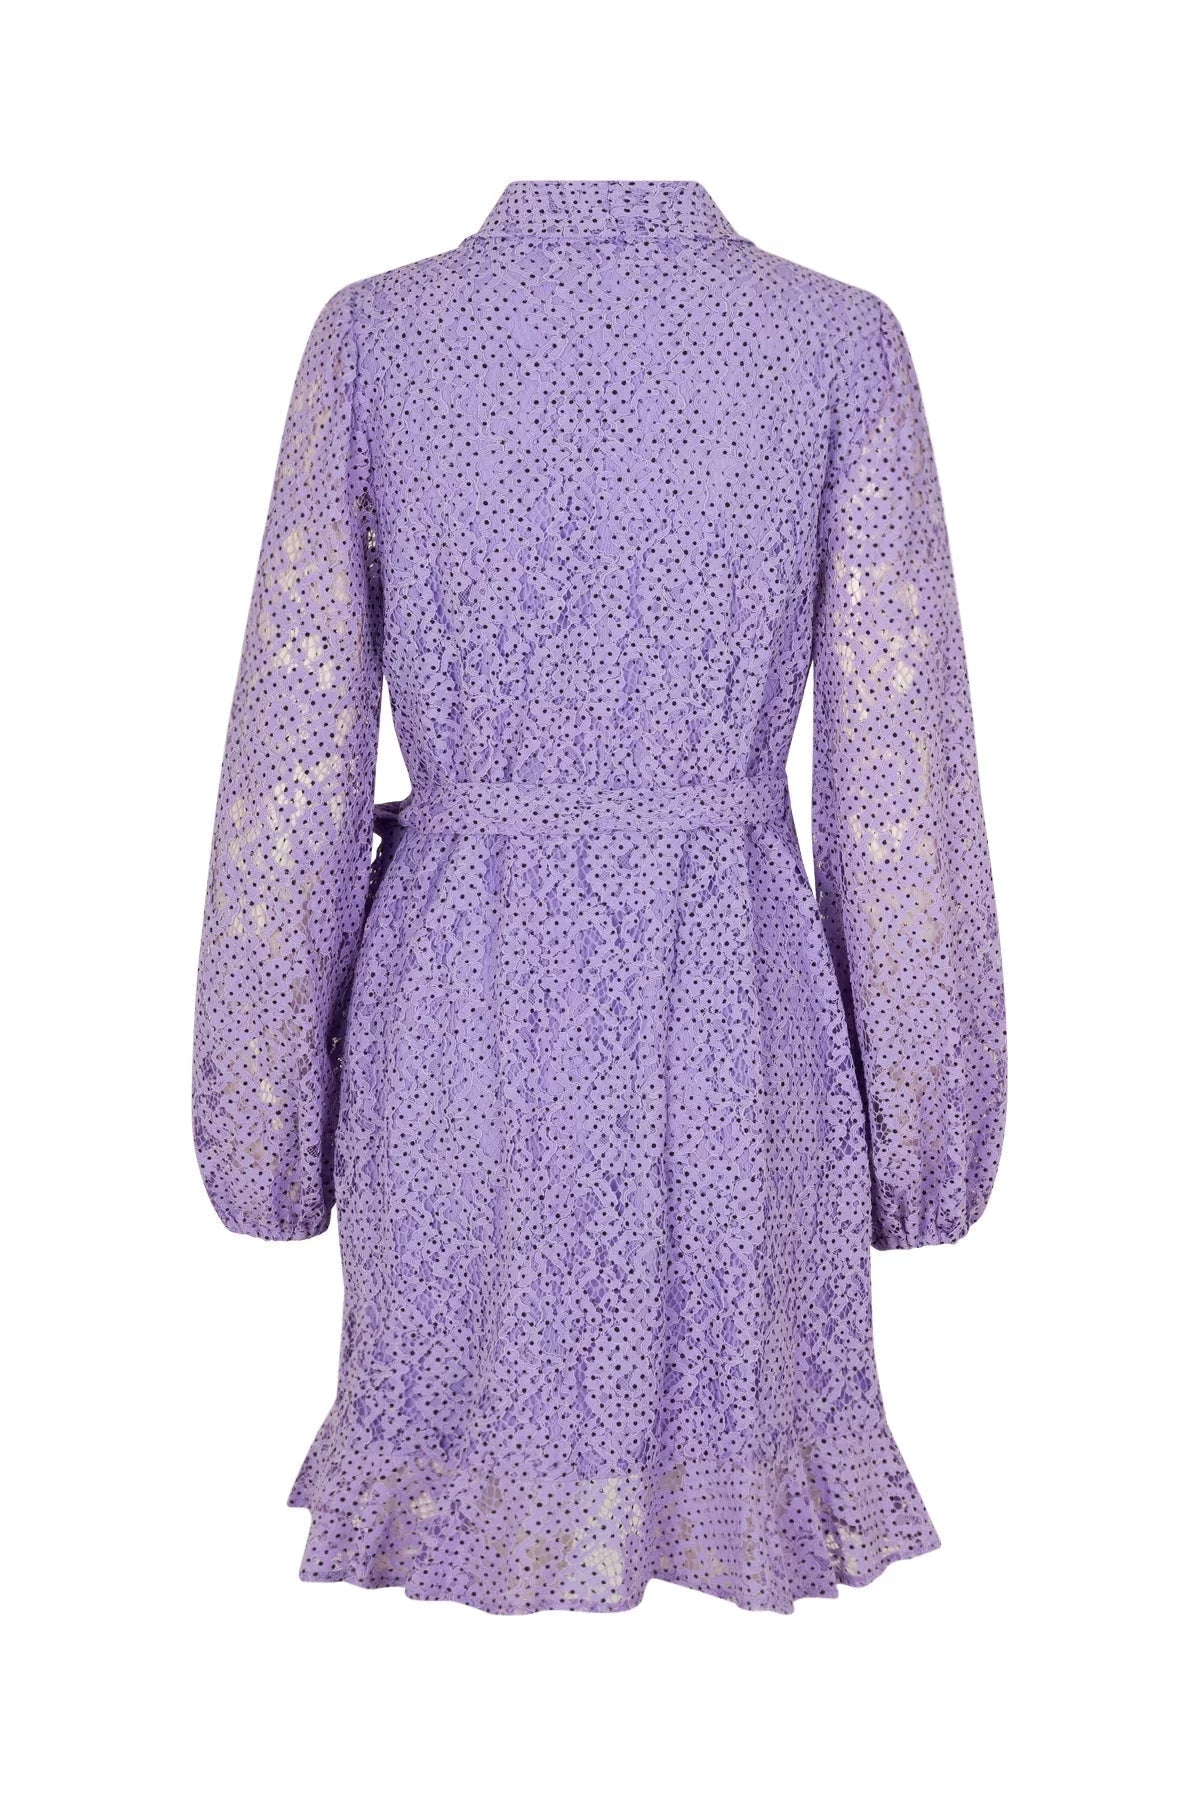 Cras - Lindacras dress, lavender by Crâs | stylebykul